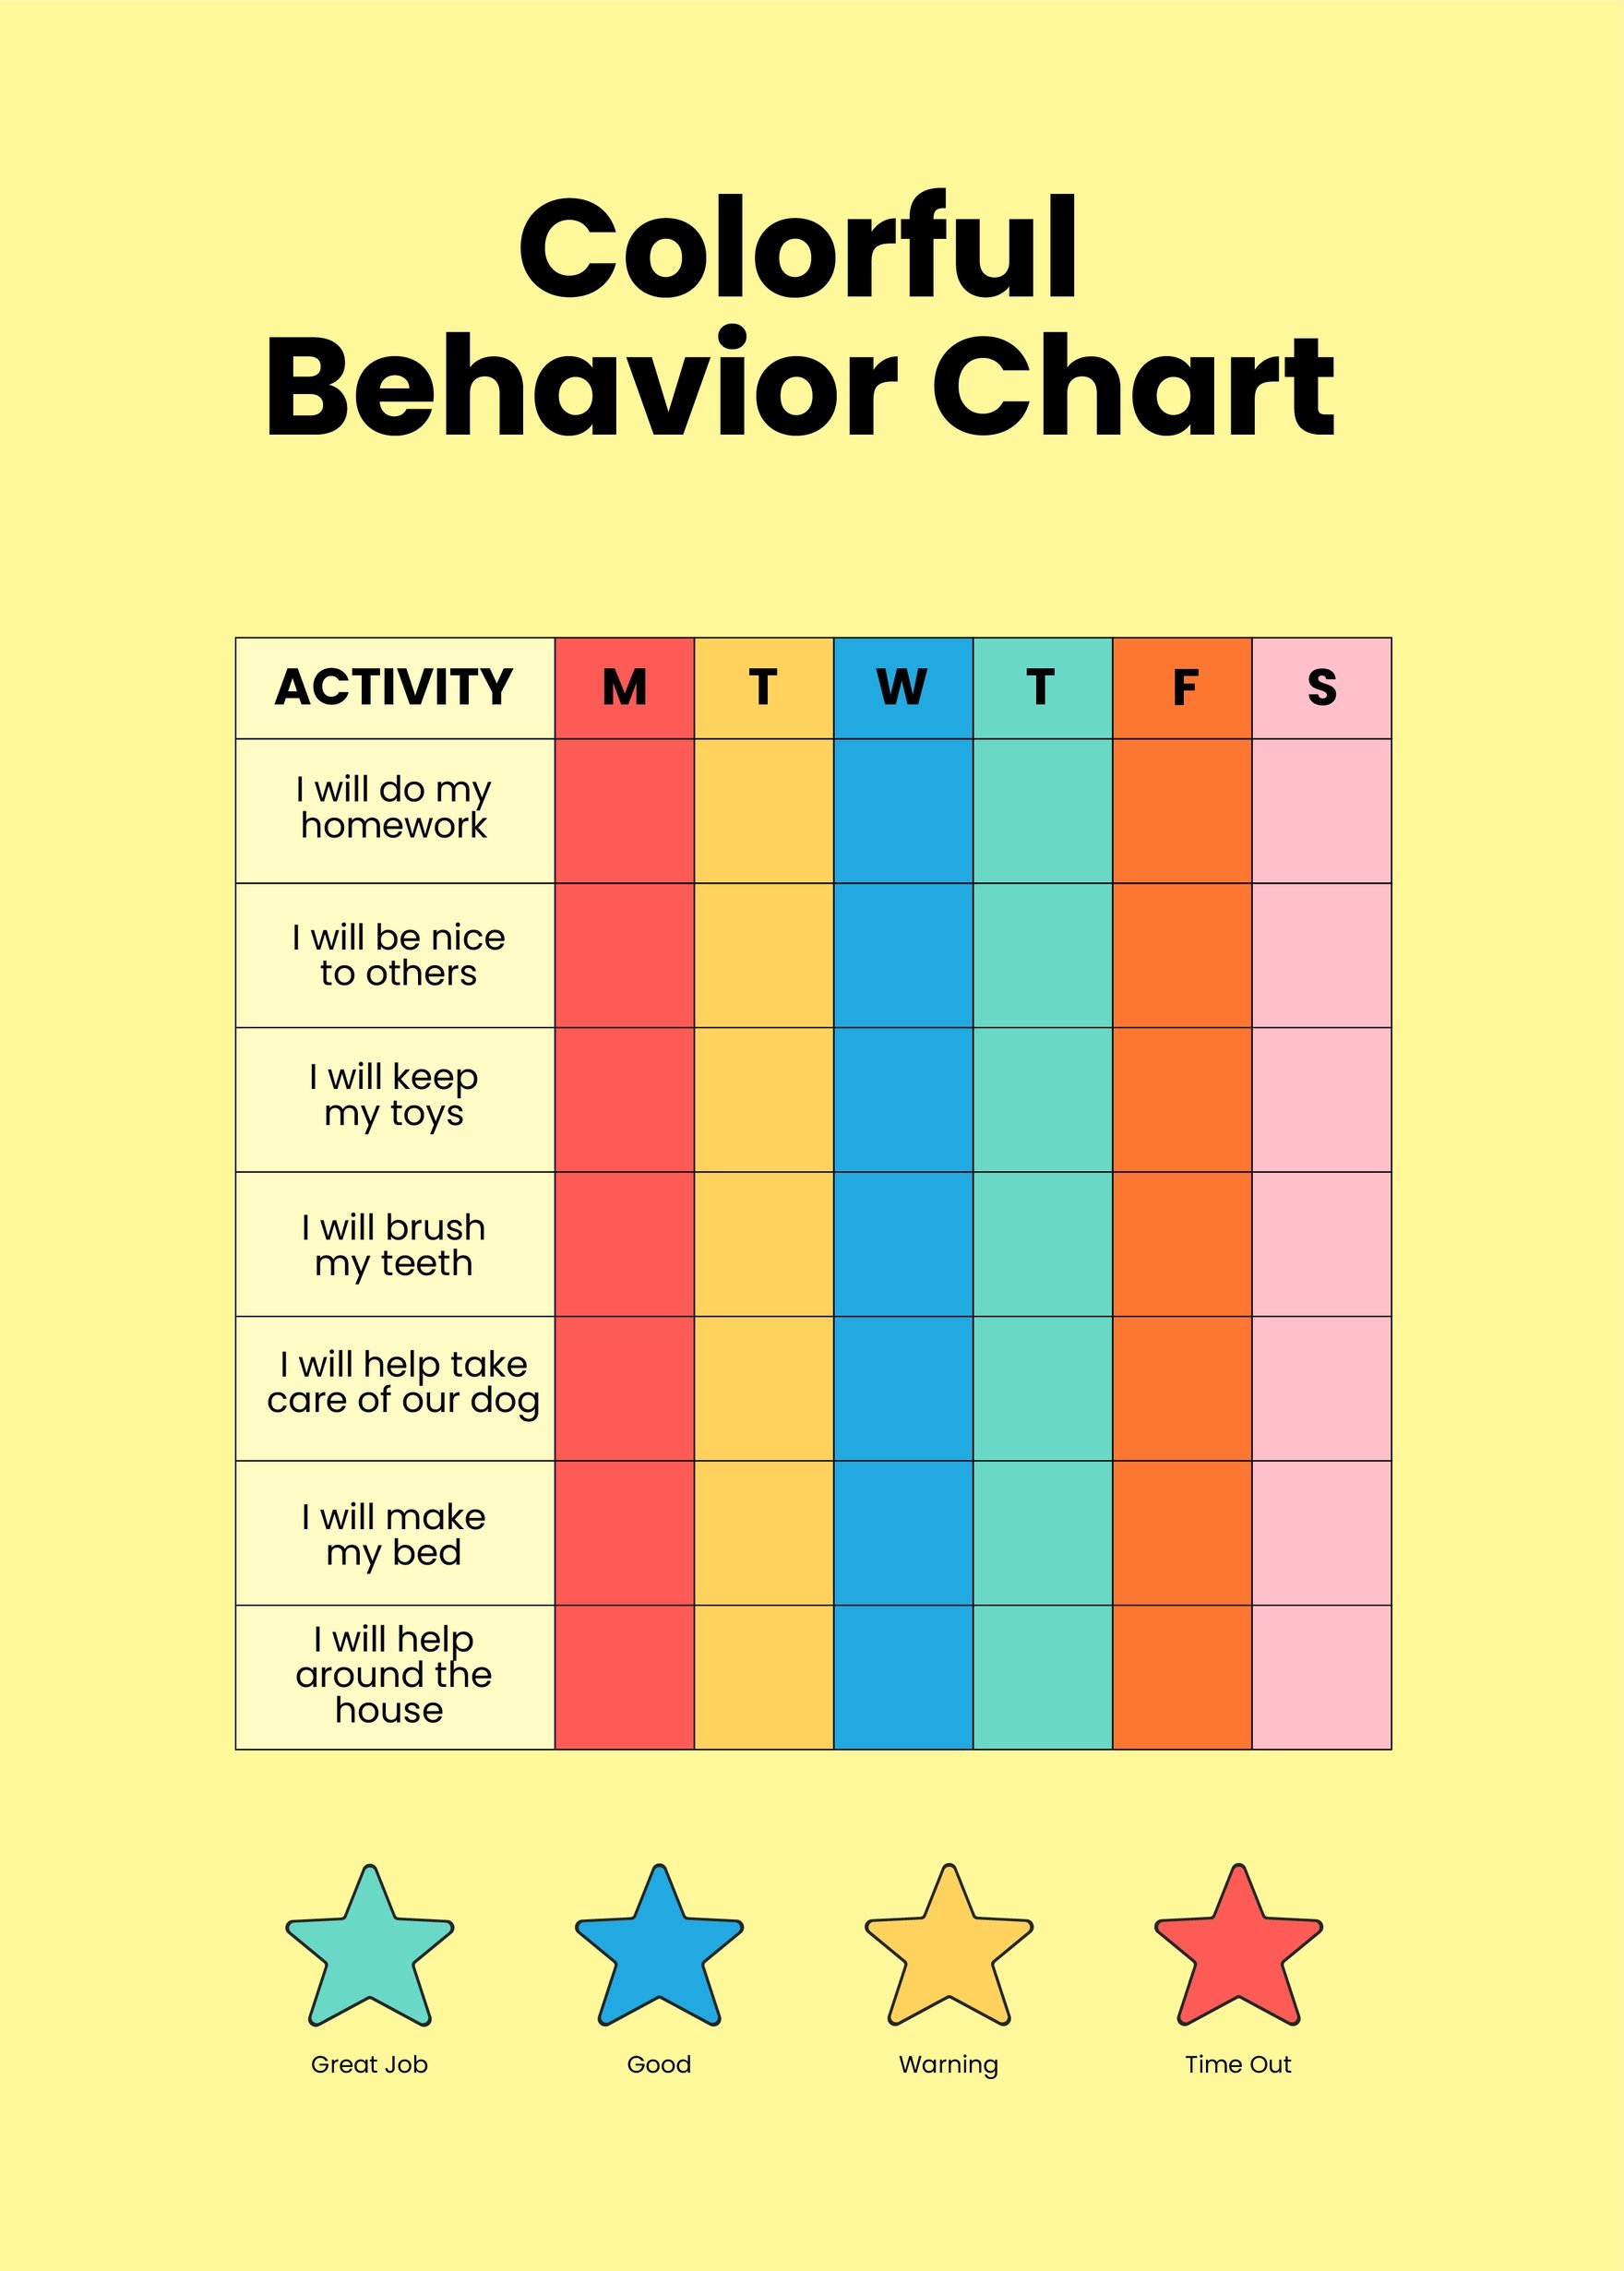 Colorful Behavior Chart